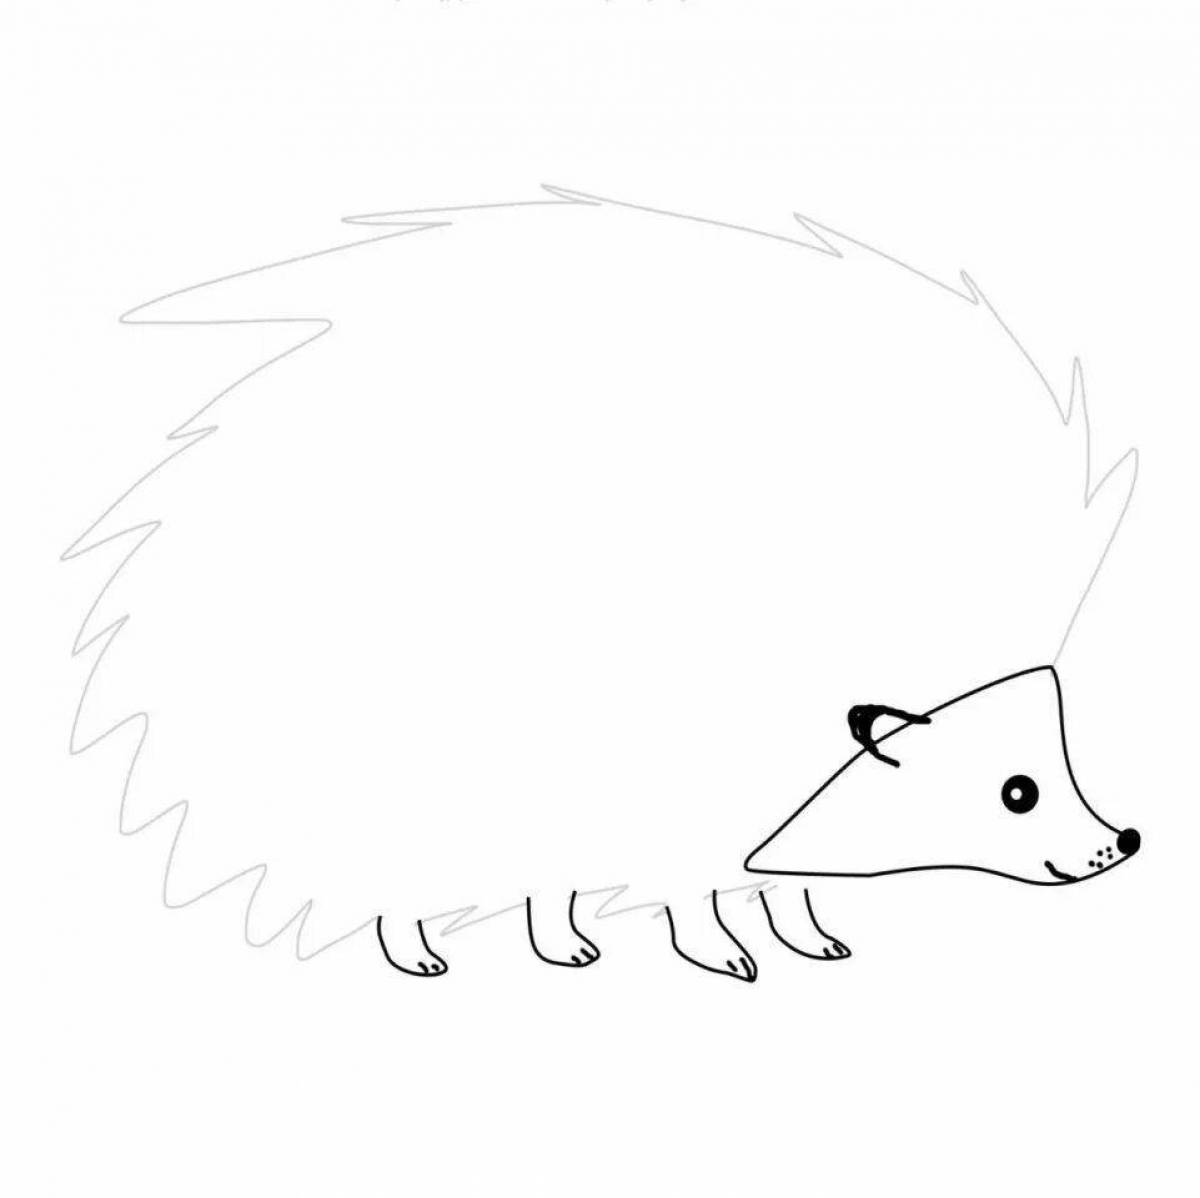 Joyful coloring hedgehog without needles